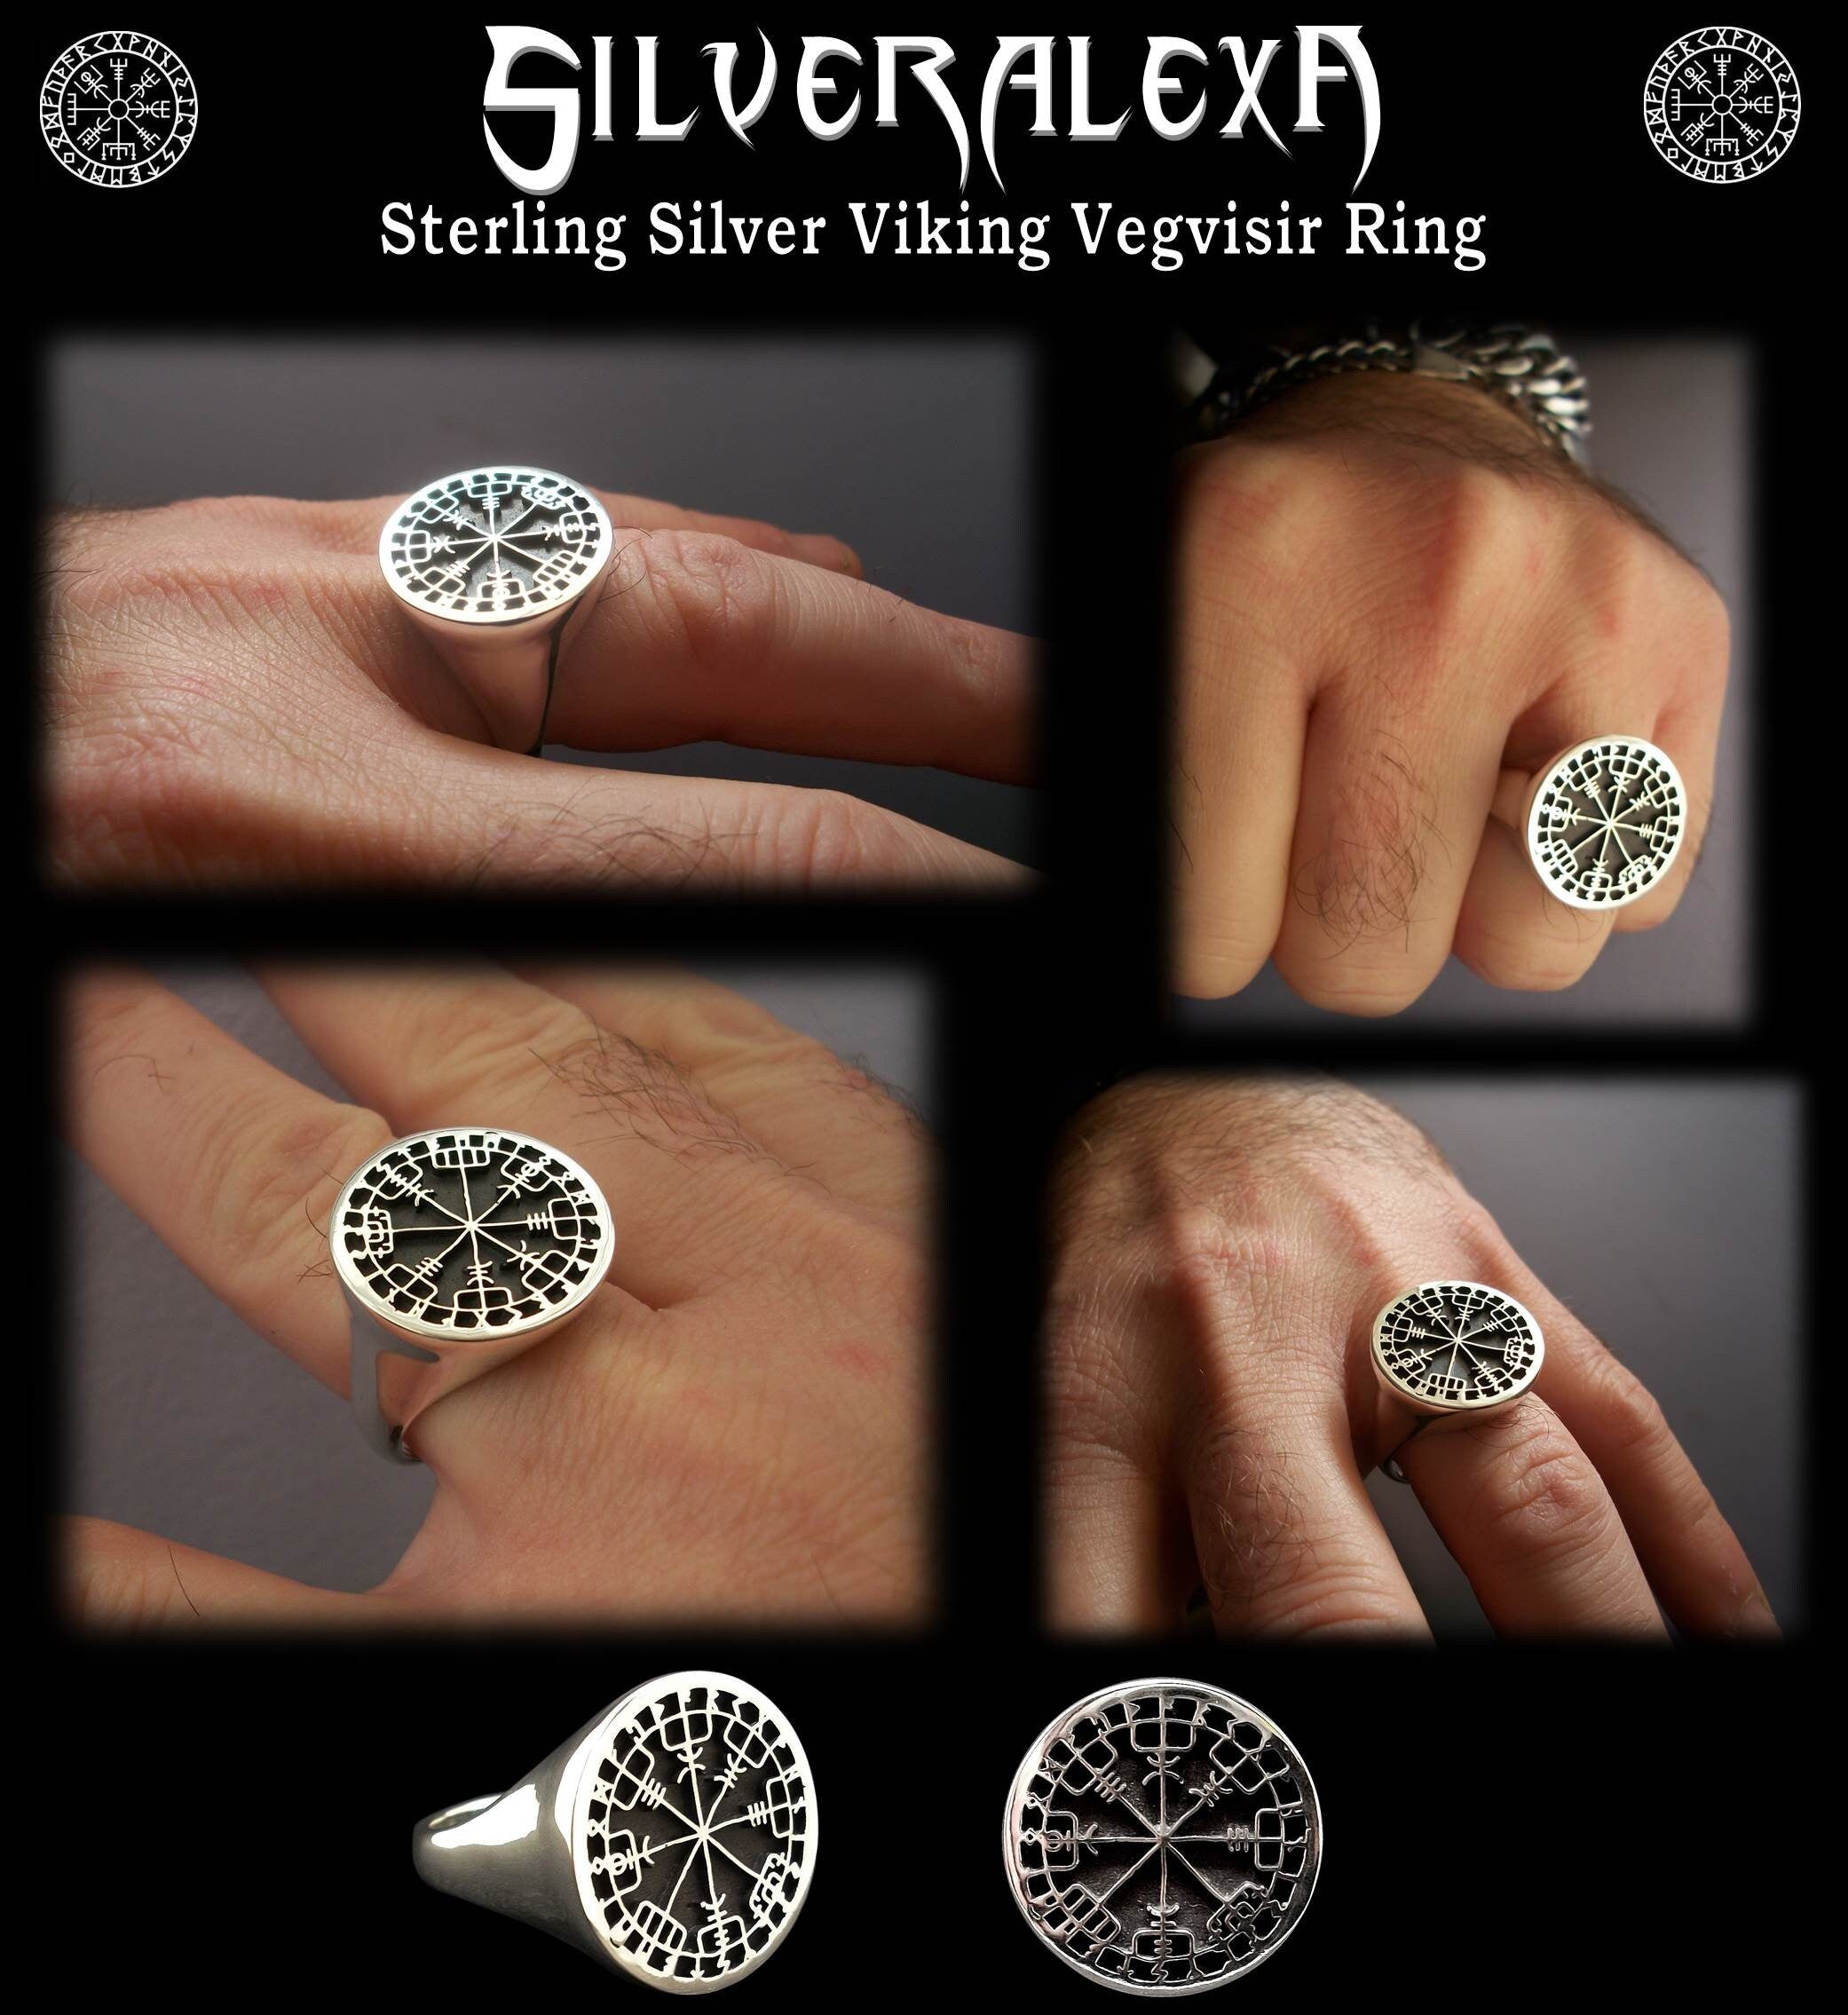 Vegvisir ring - Sterling Silver Viking Vegvisir Ring - ALL SIZES